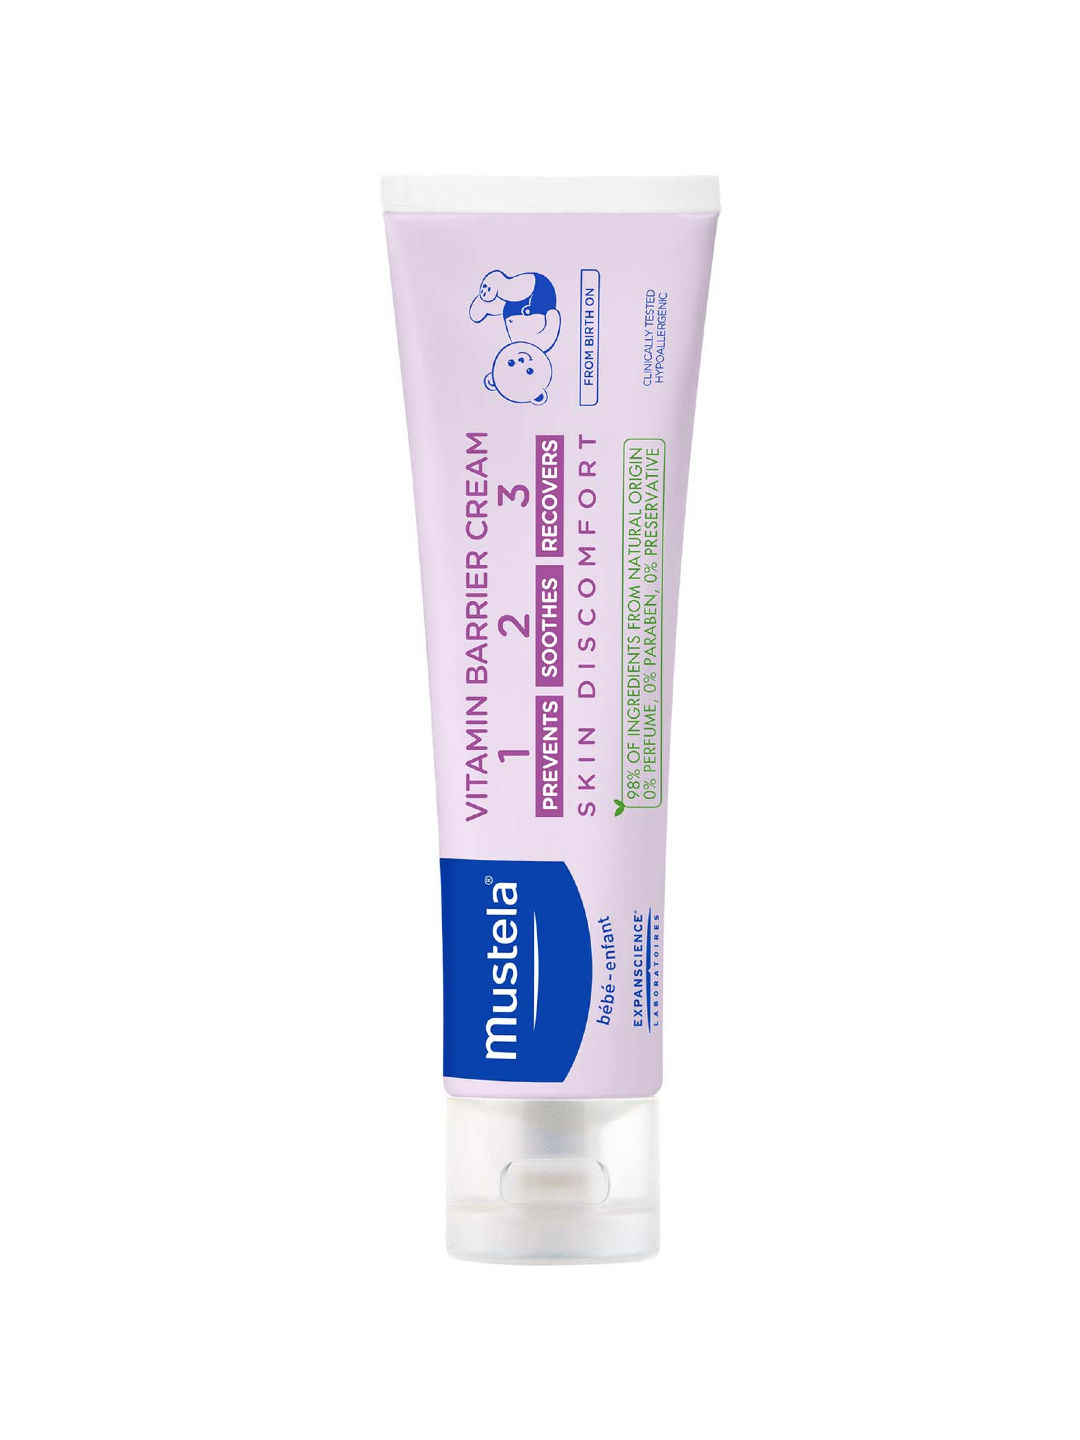 Mustela Vitamin Barrier Cream 123 (50ml)